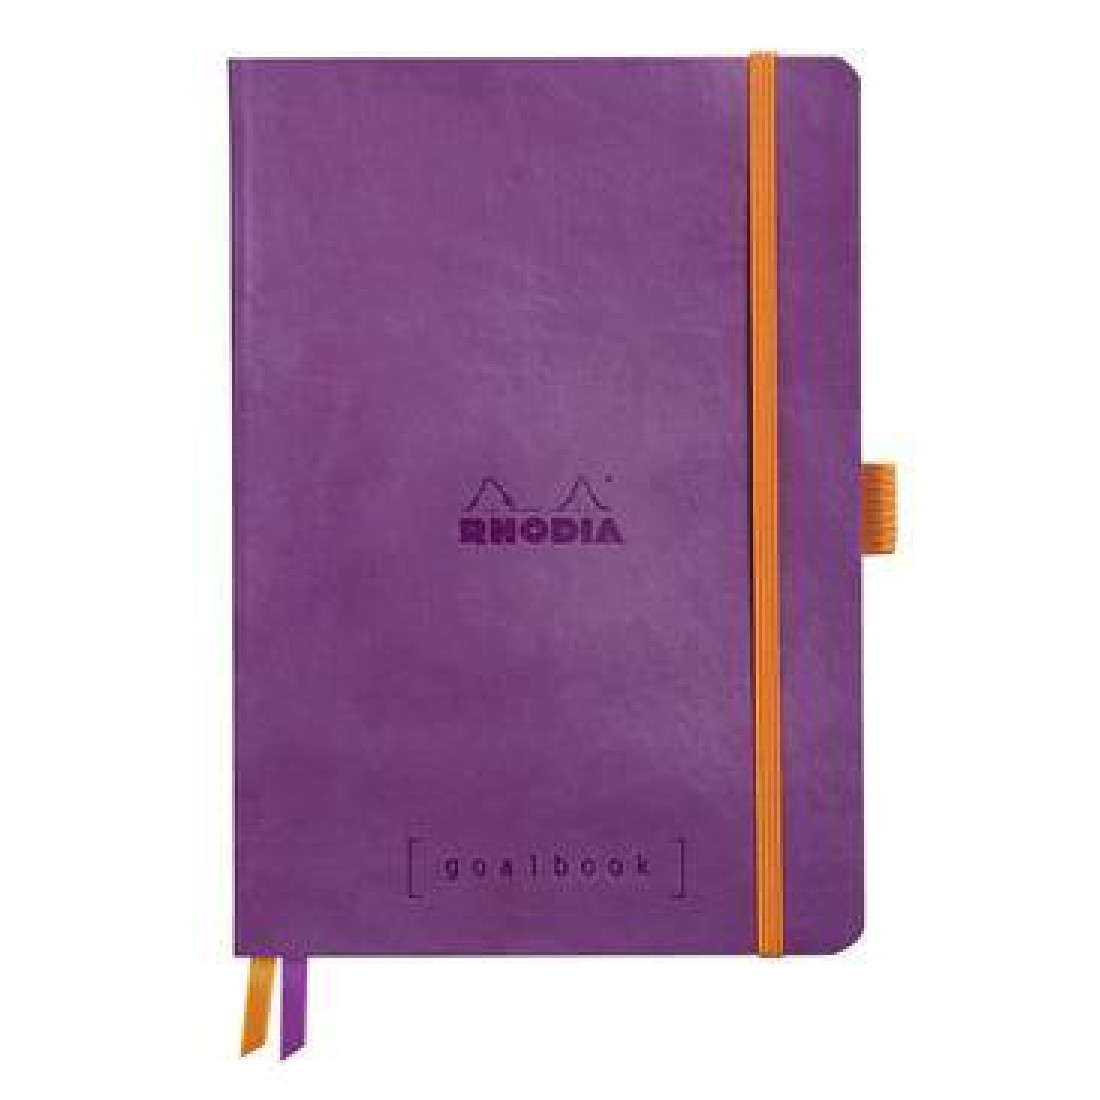 Rhodia GoalBook A5 (14,8x21 cm) purple dot grid soft cover